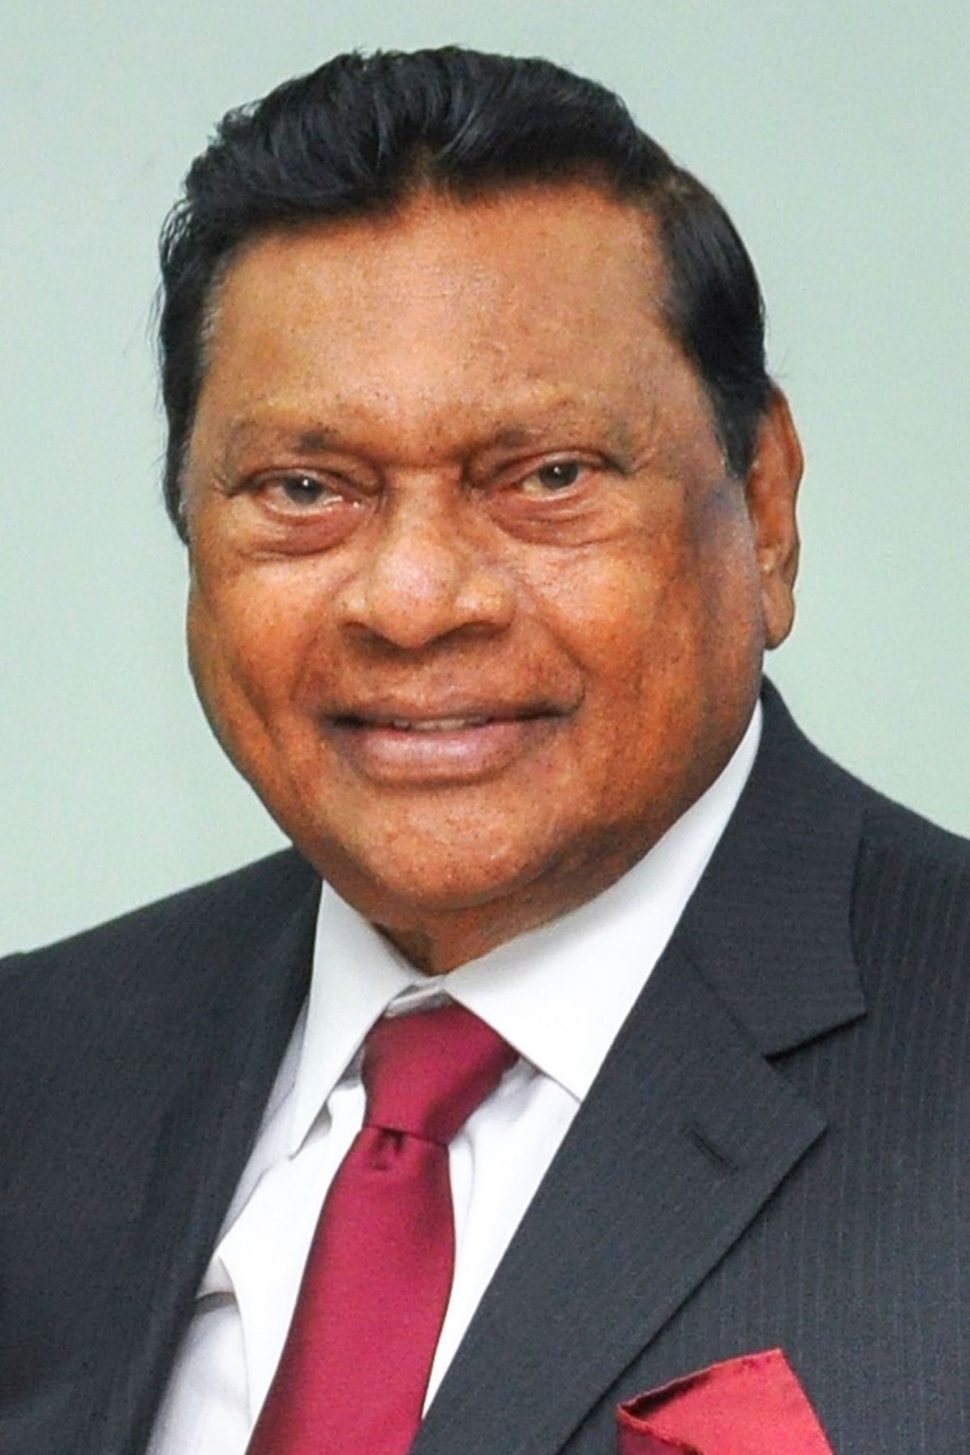 Hubert Bhagwansingh, founder and chairman of the Bhagwansingh Group of Companies